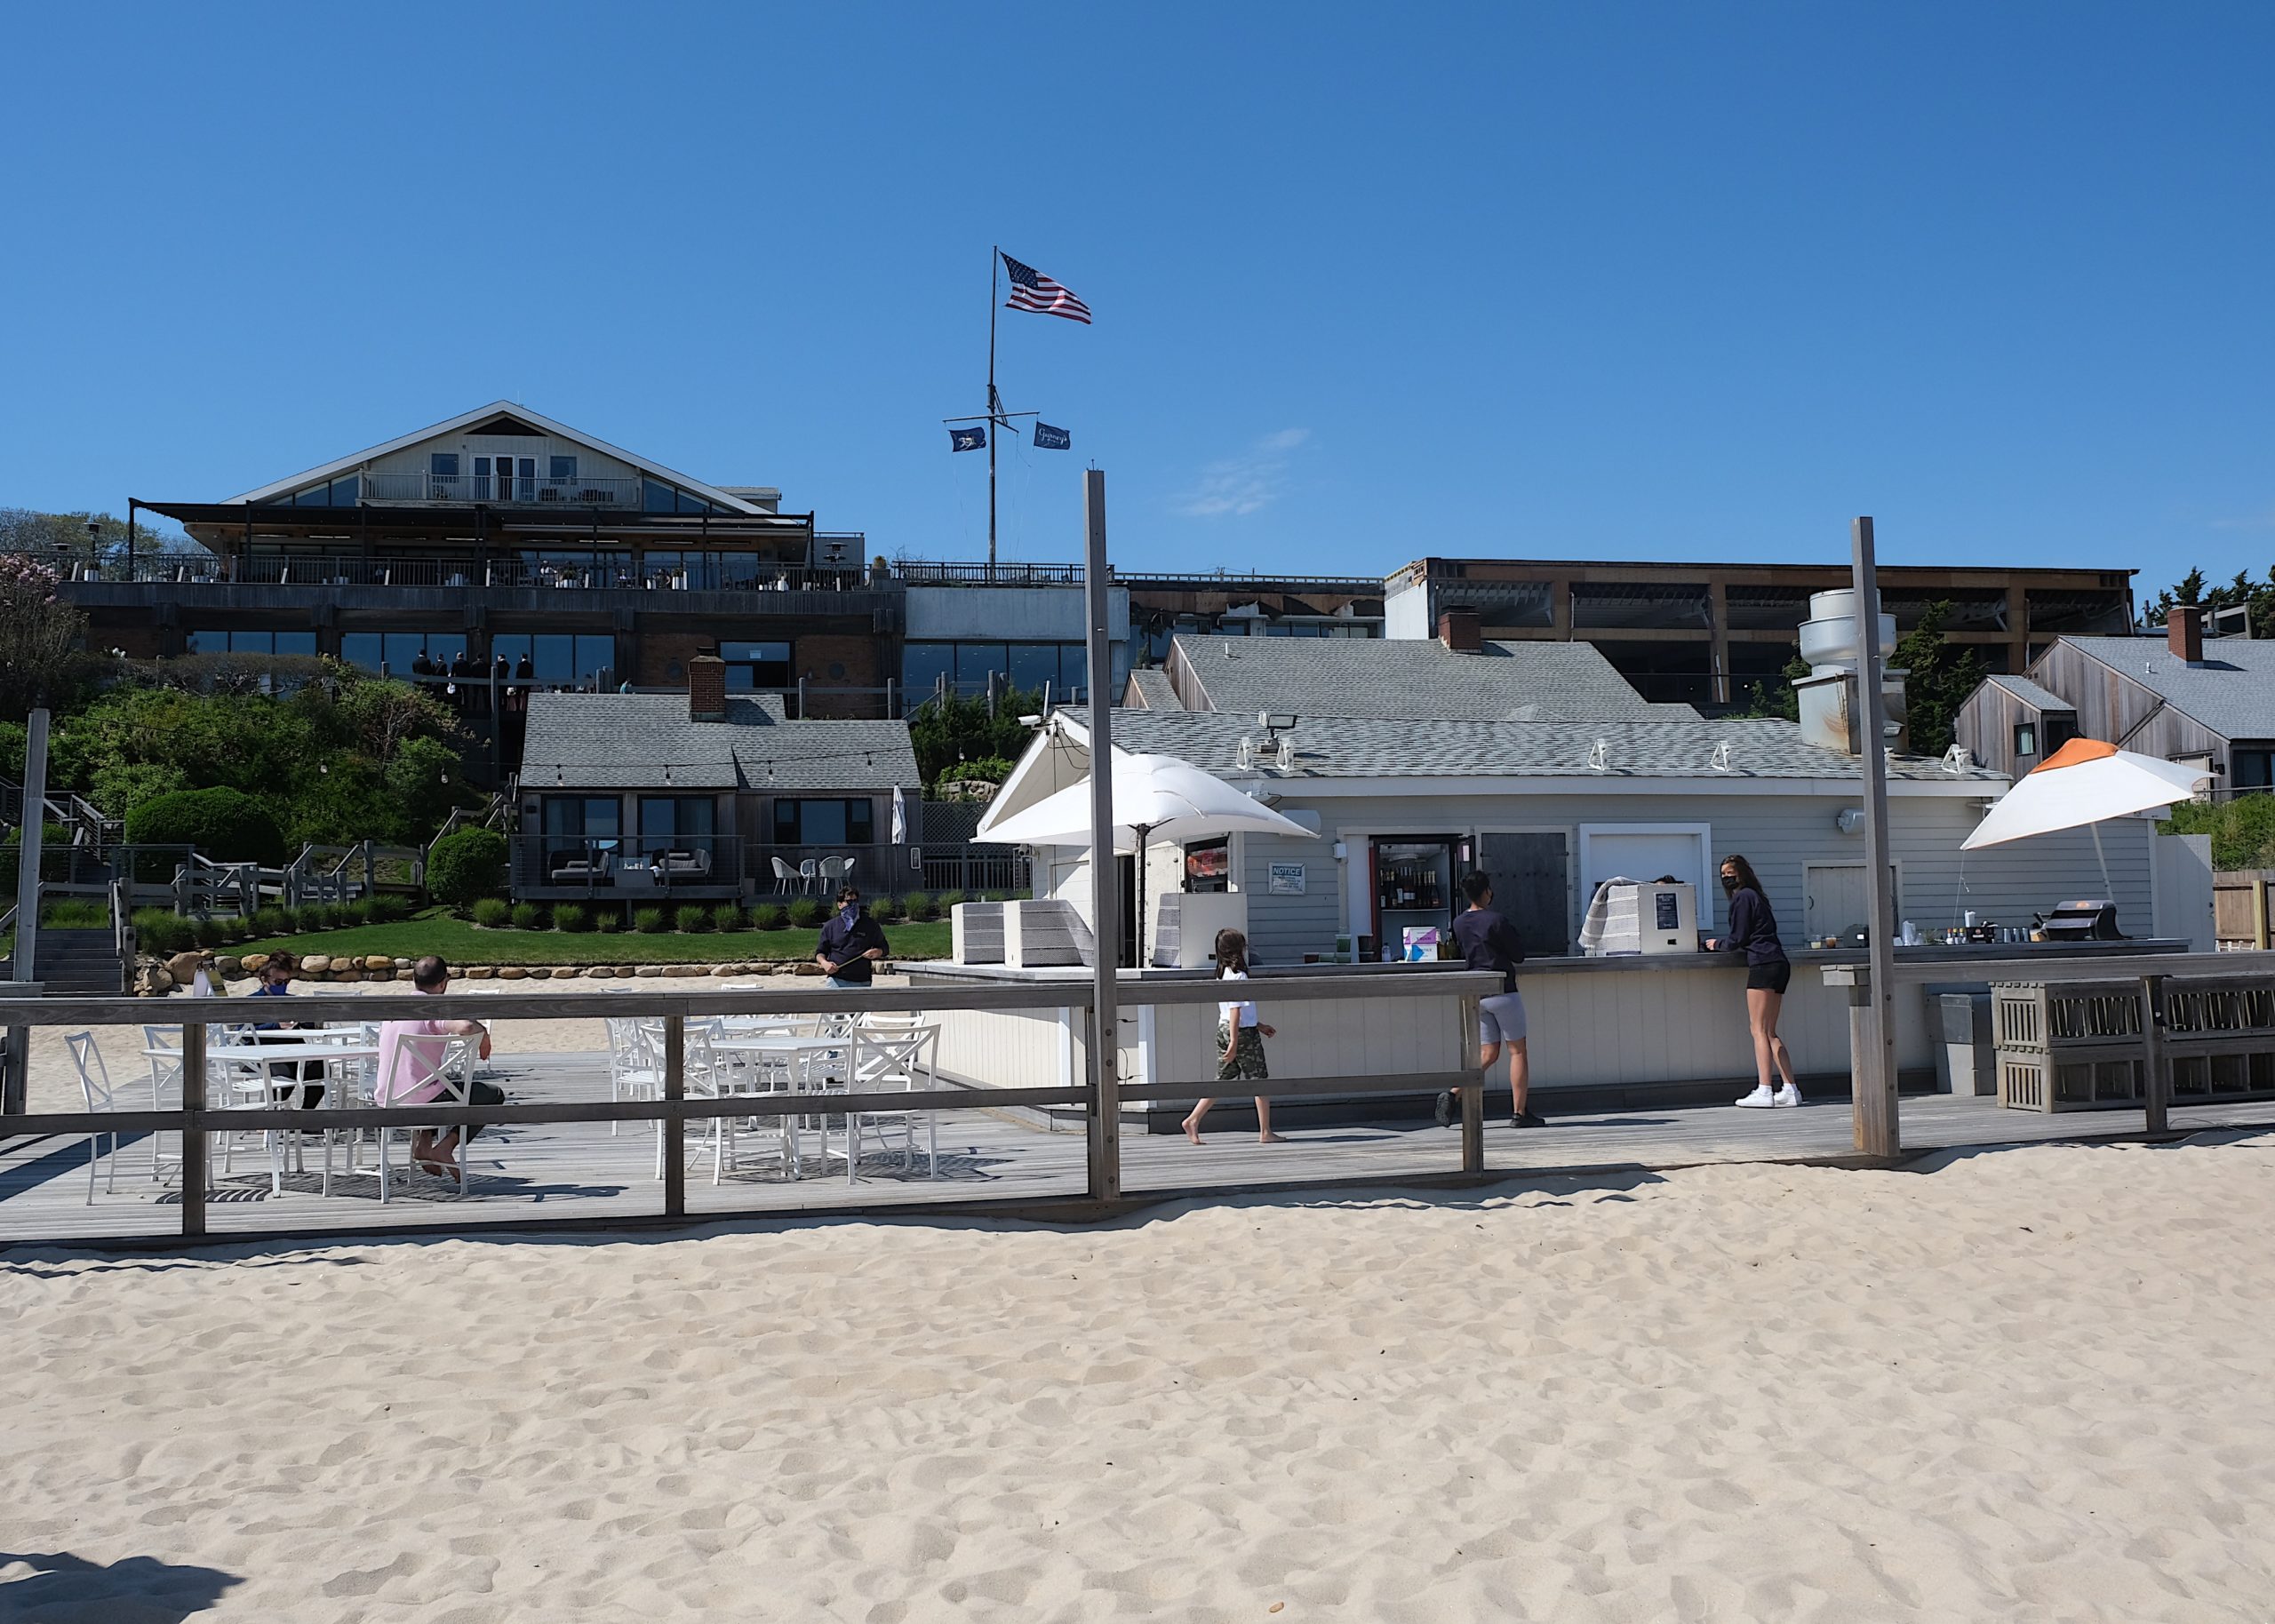 Building Inspector Revokes Gurneys C/O, Owner Says Beach Deck Will Be